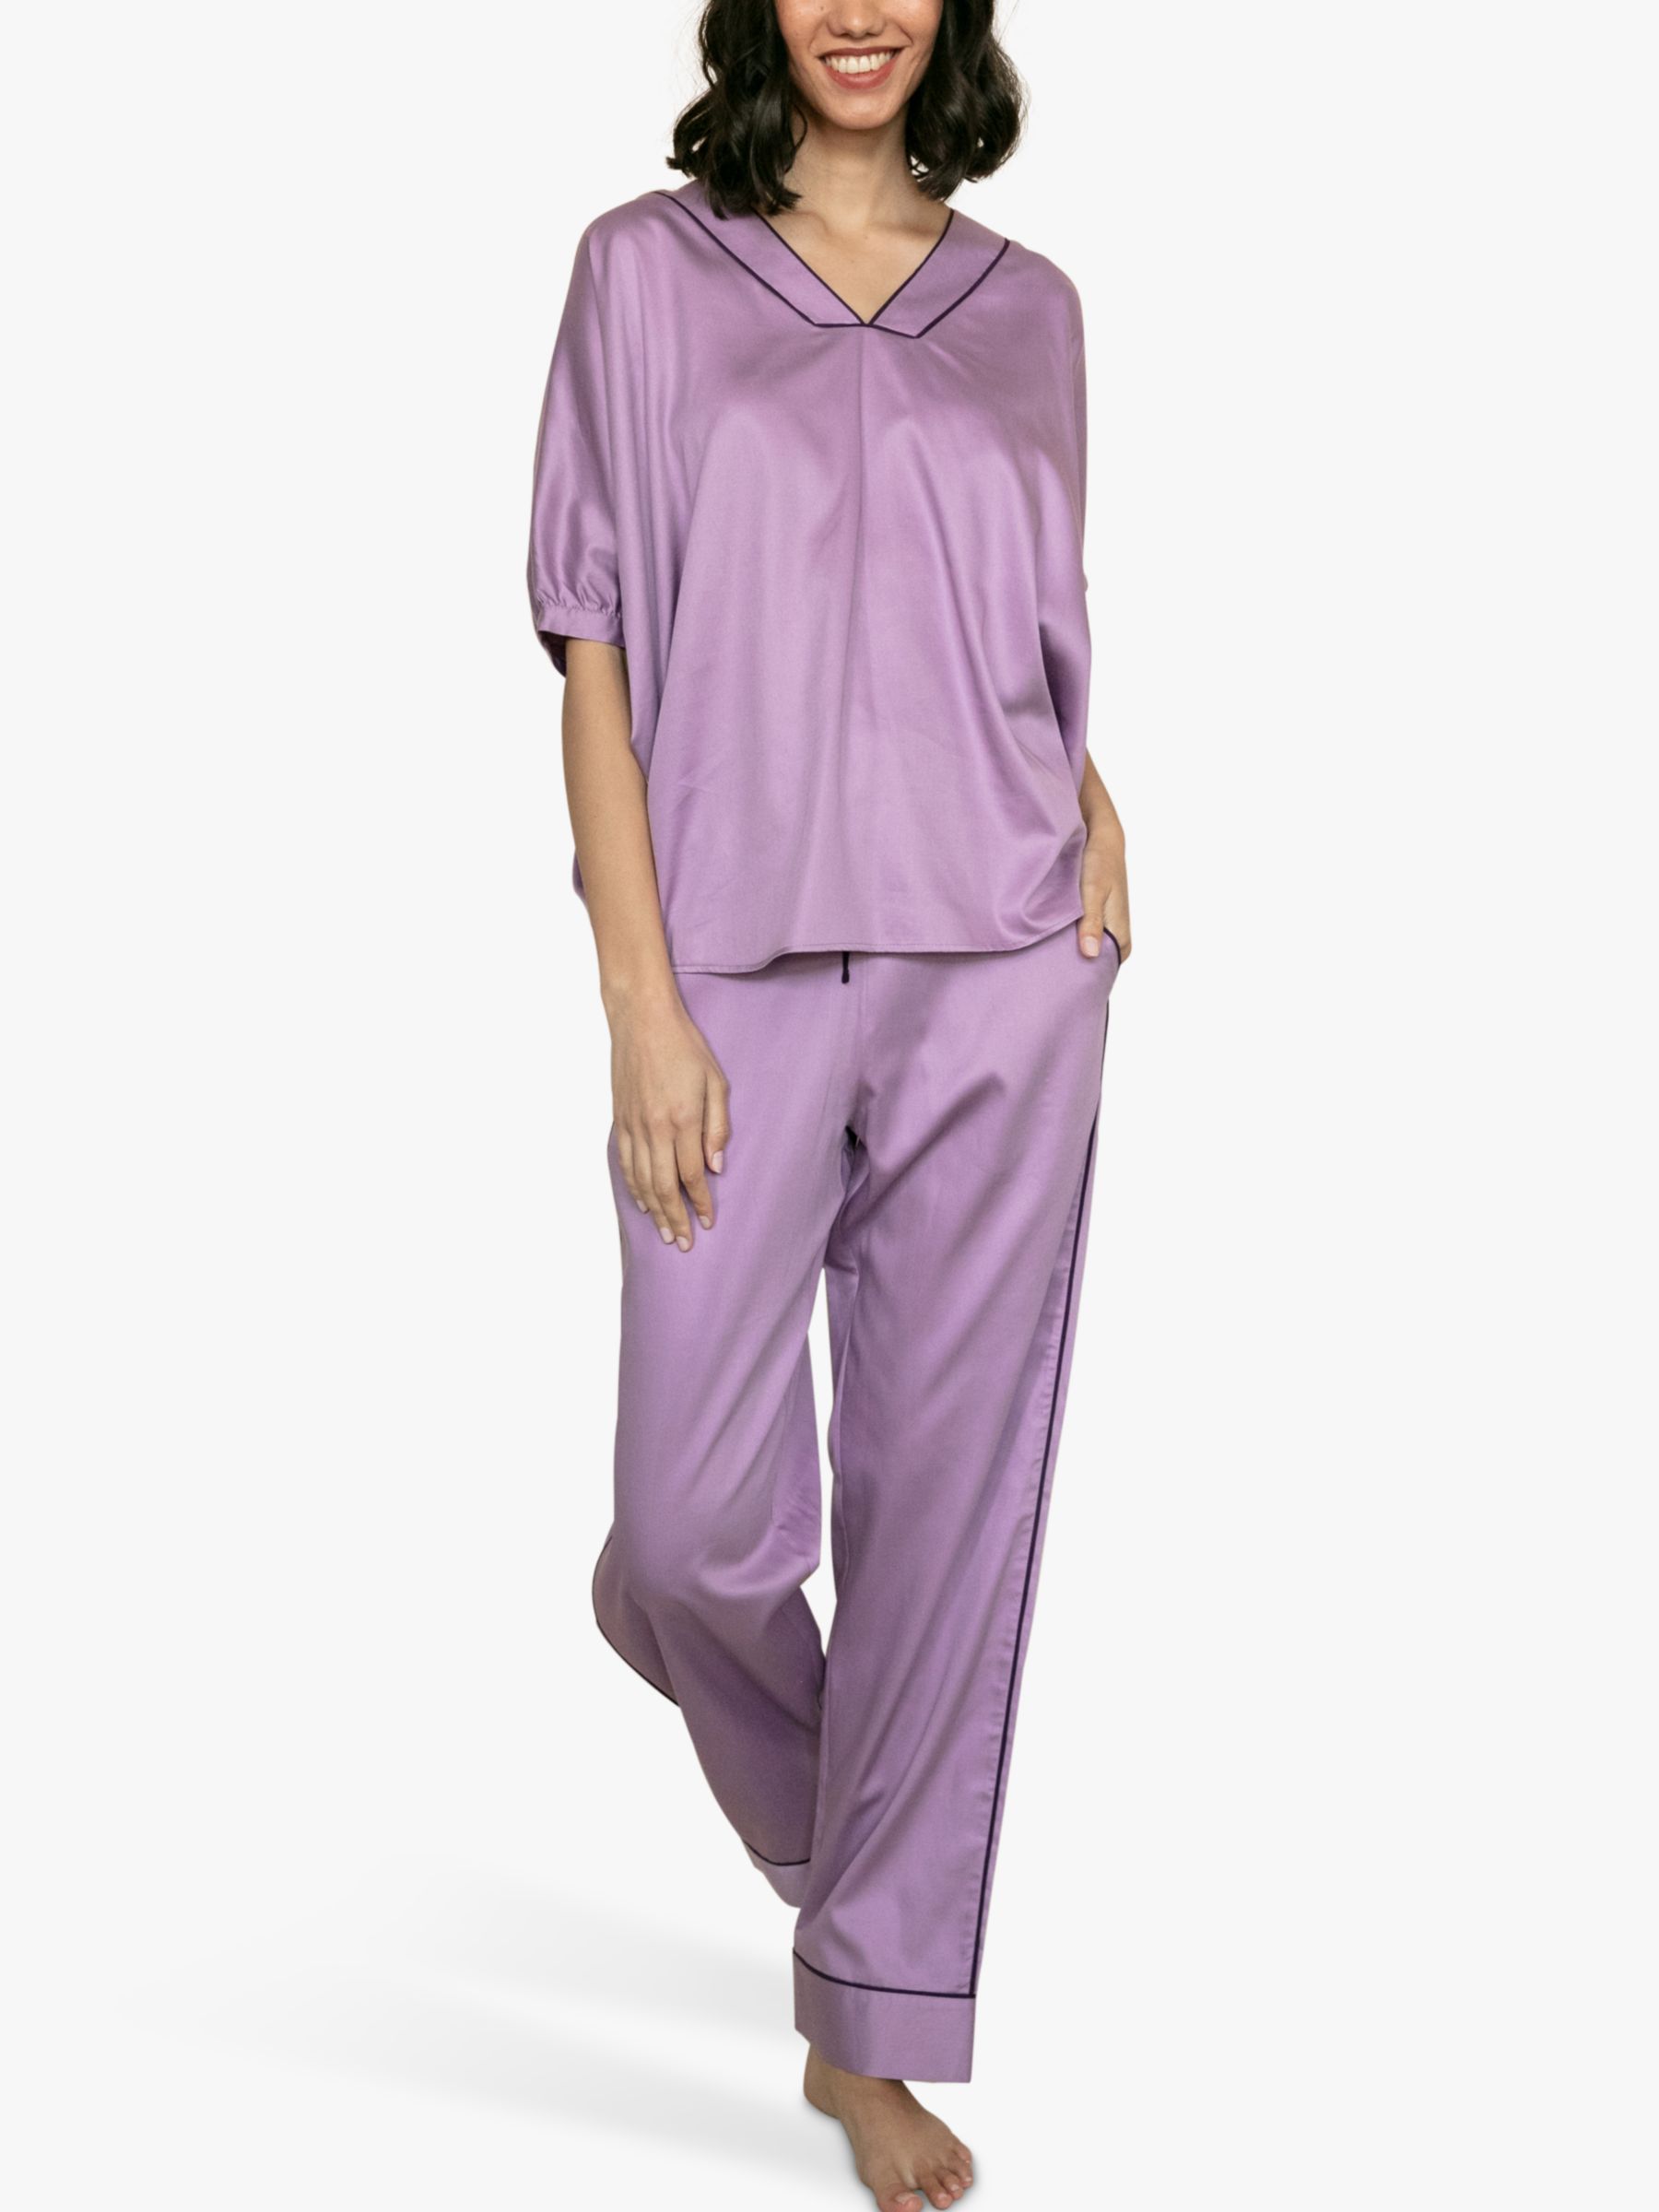 Fable & Eve Silky Pyjama Set, Lilac, 8